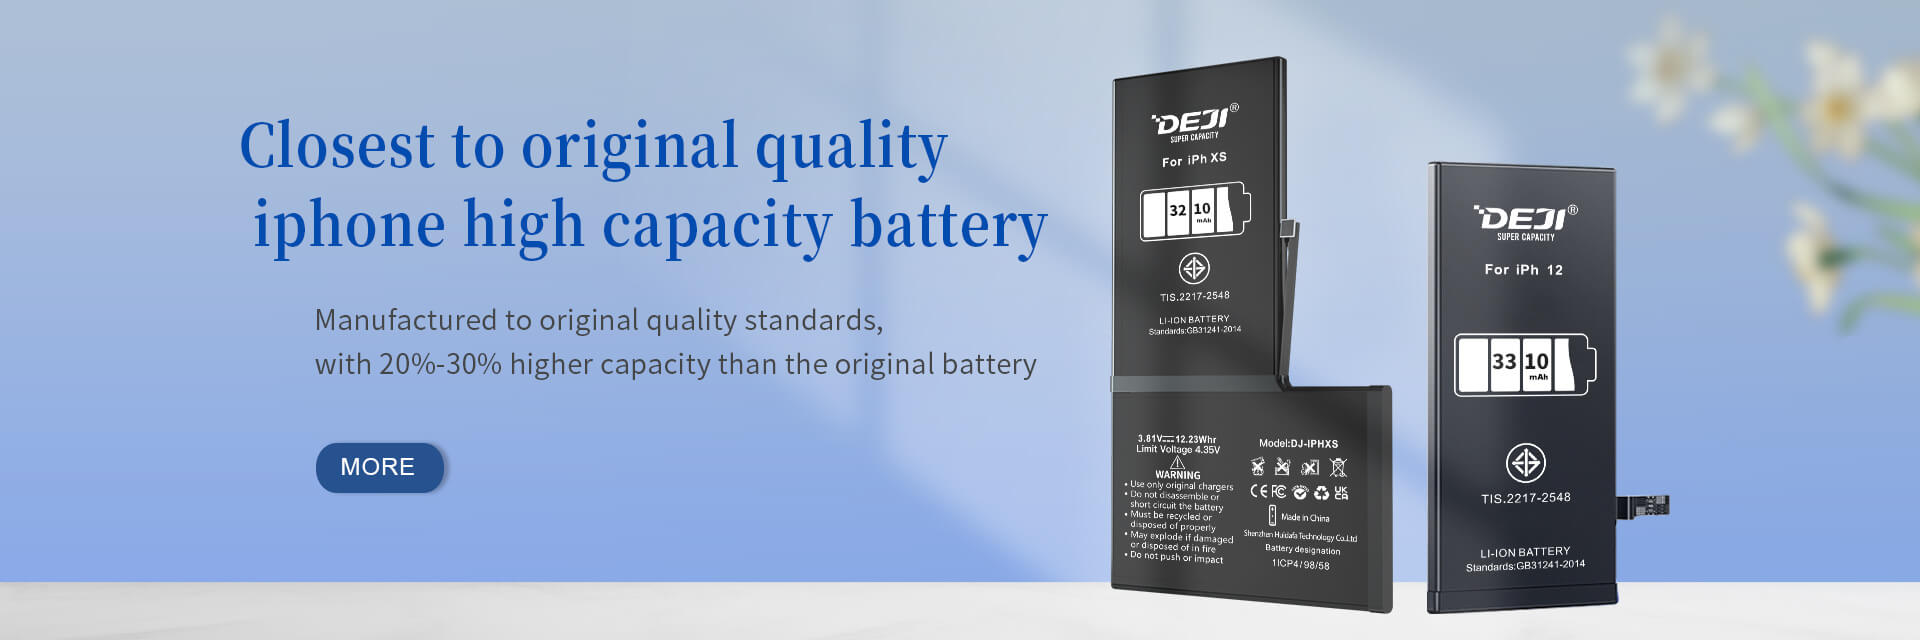 DEJI iphone high capacity battery